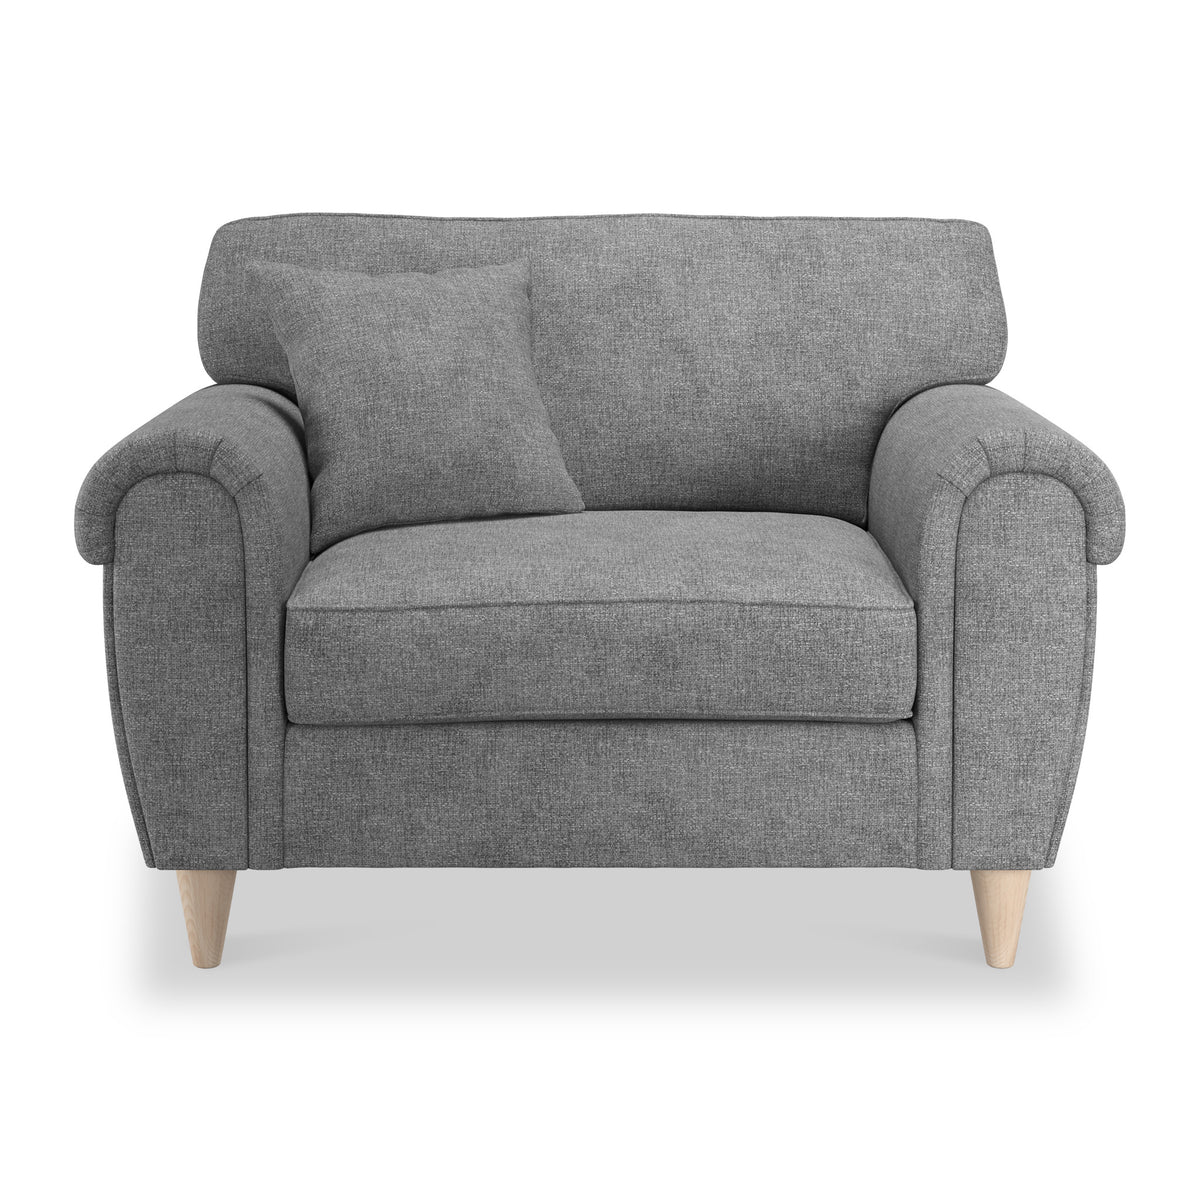 Harry Dark Grey Snuggle Living room Chairs